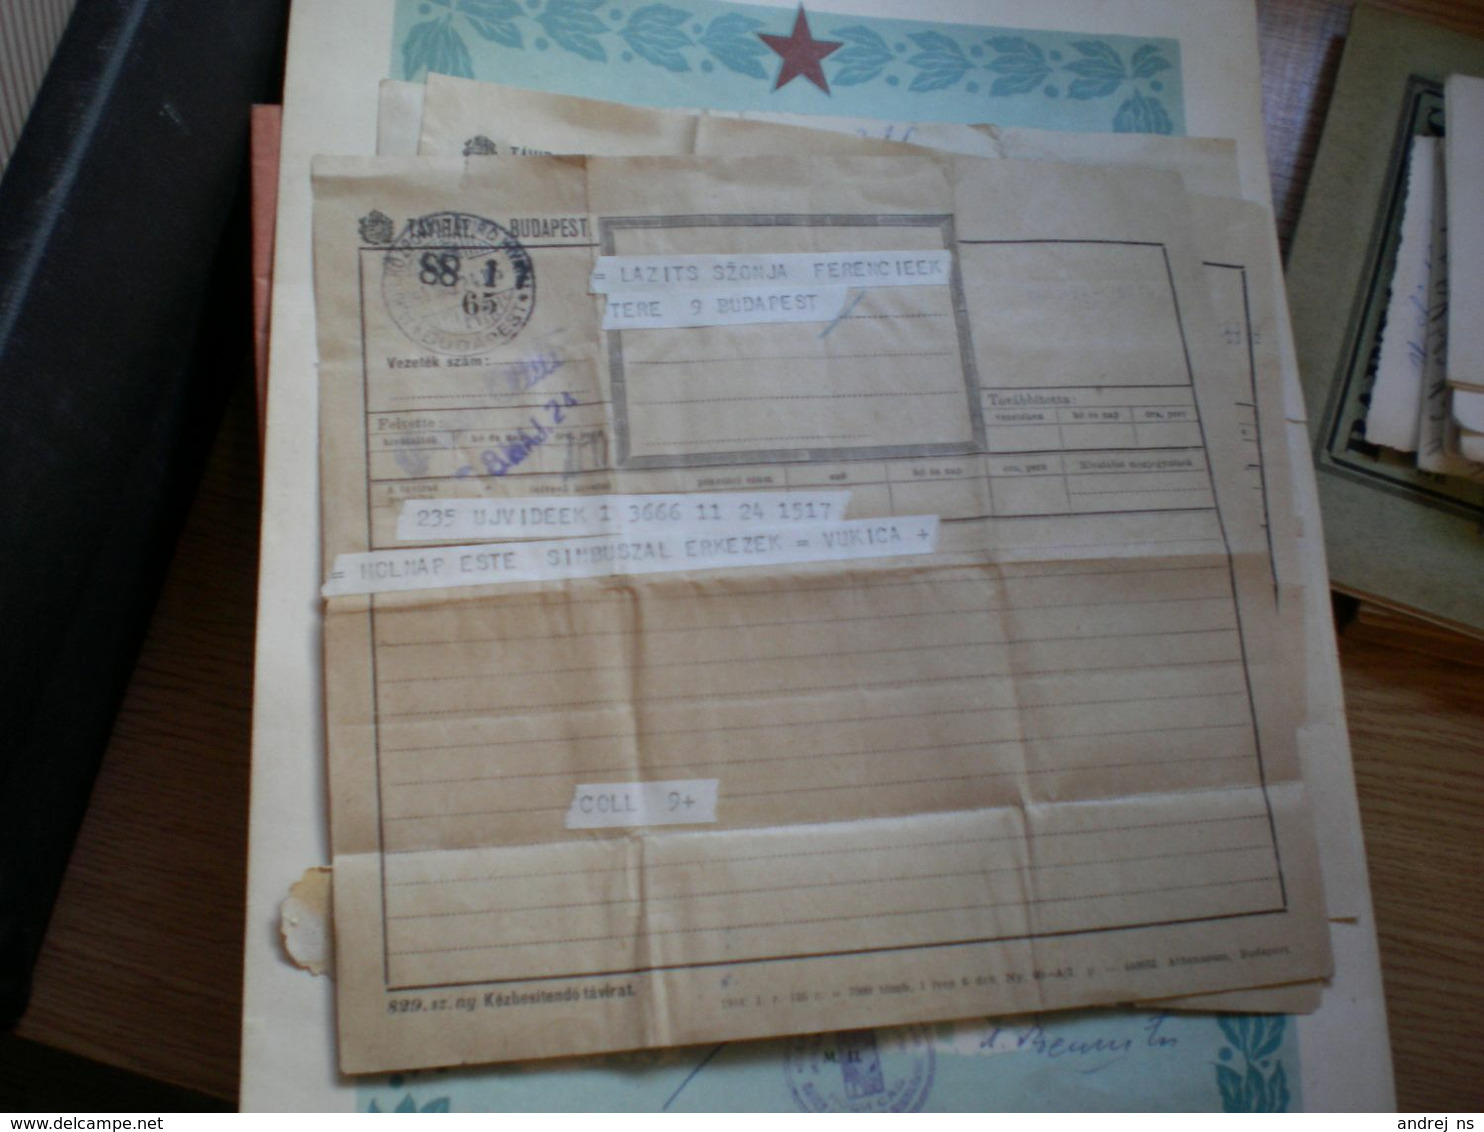 Telegram Tavirat Budapest  To Ujvidek Novi Sad 1944 WW2 - Telegrafi